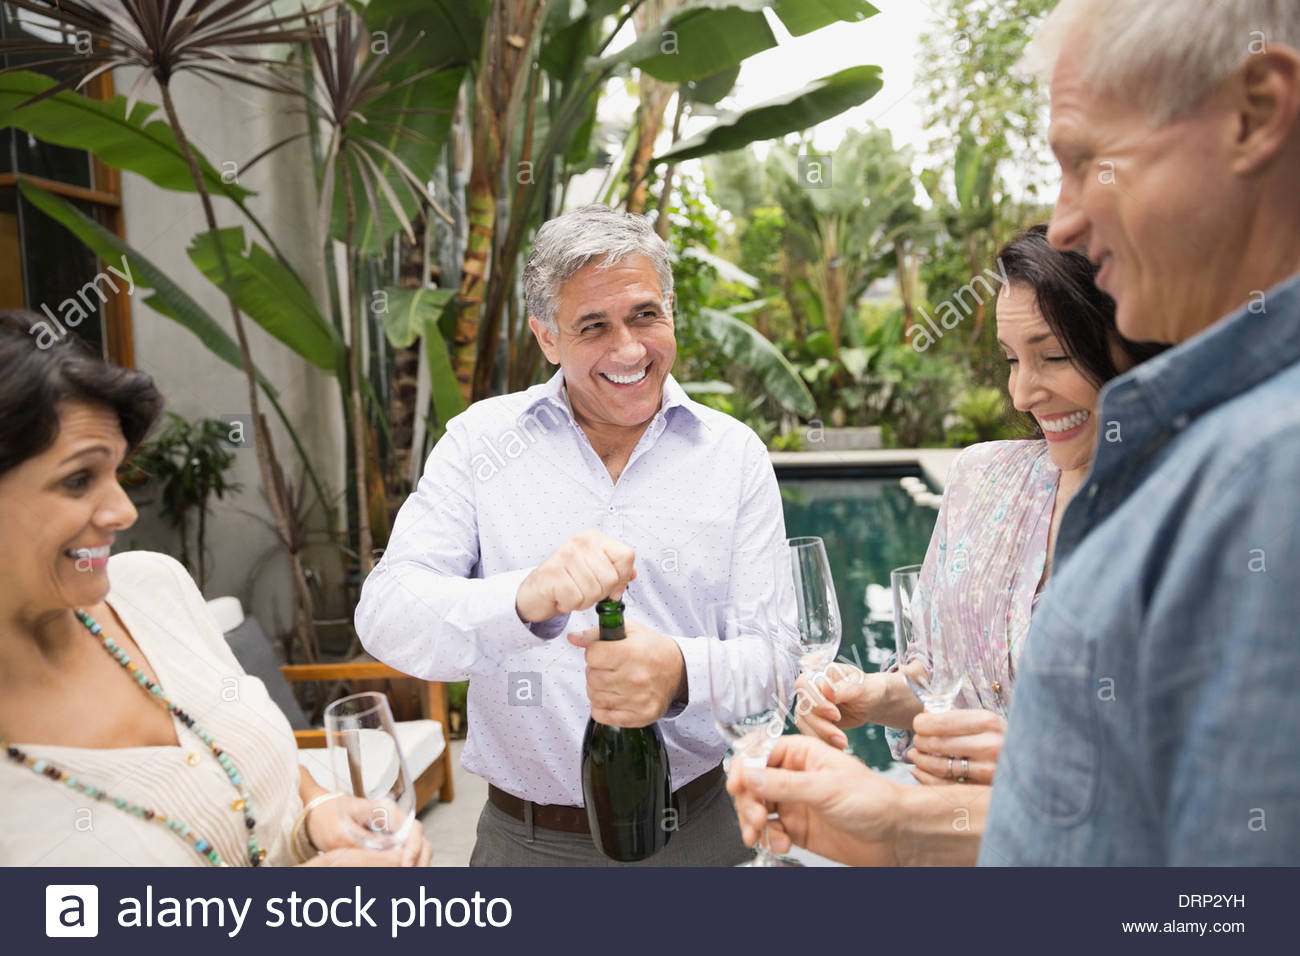 Man opening champagne bottle Stock Photo